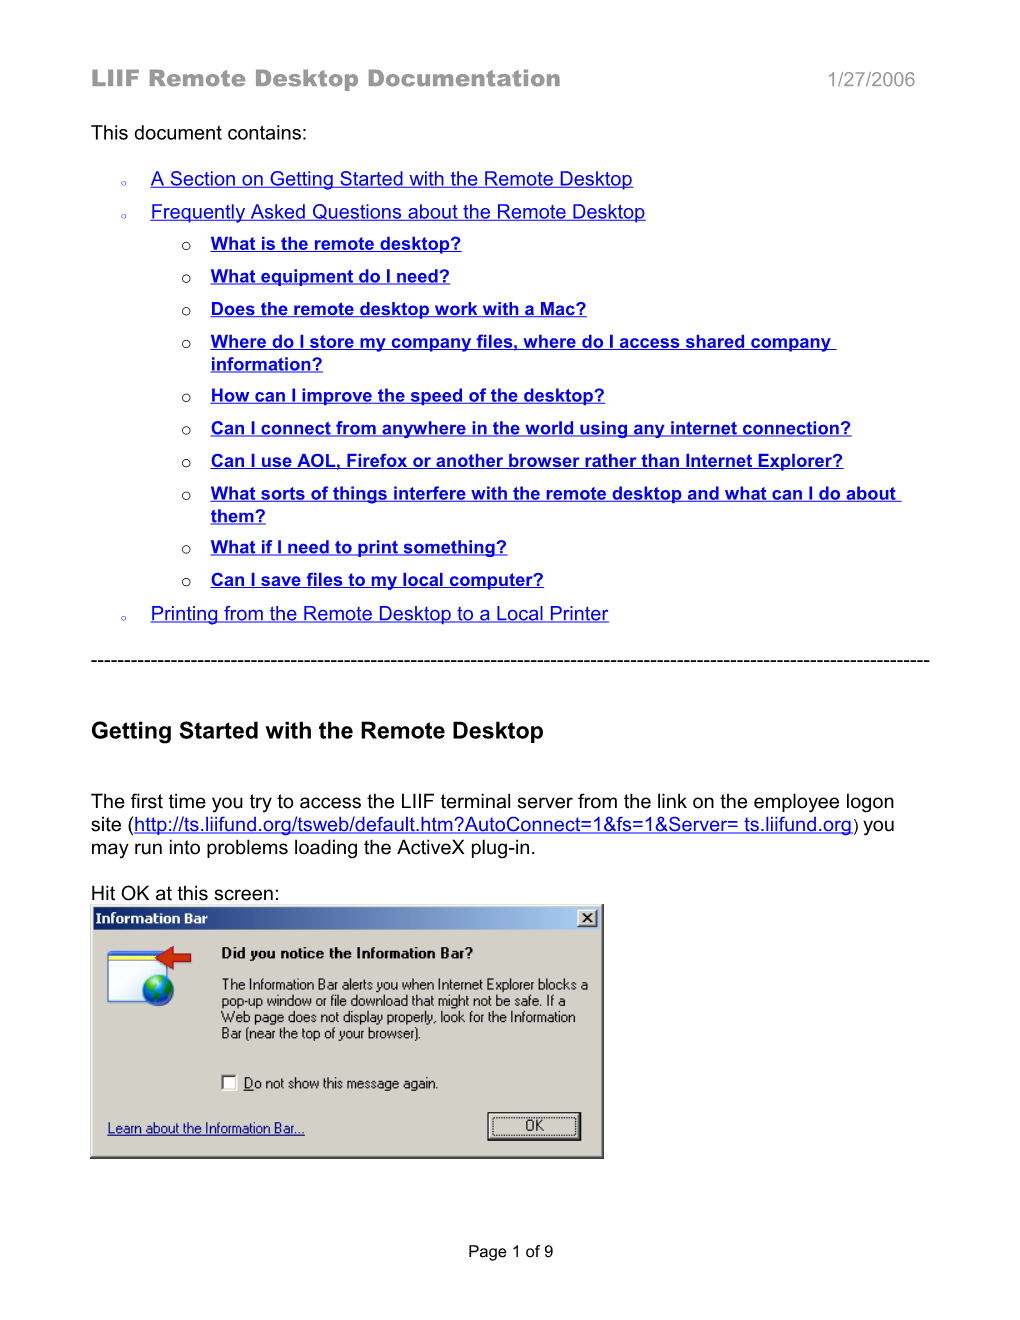 LIIF Remote Desktop Documentation1/27/2006